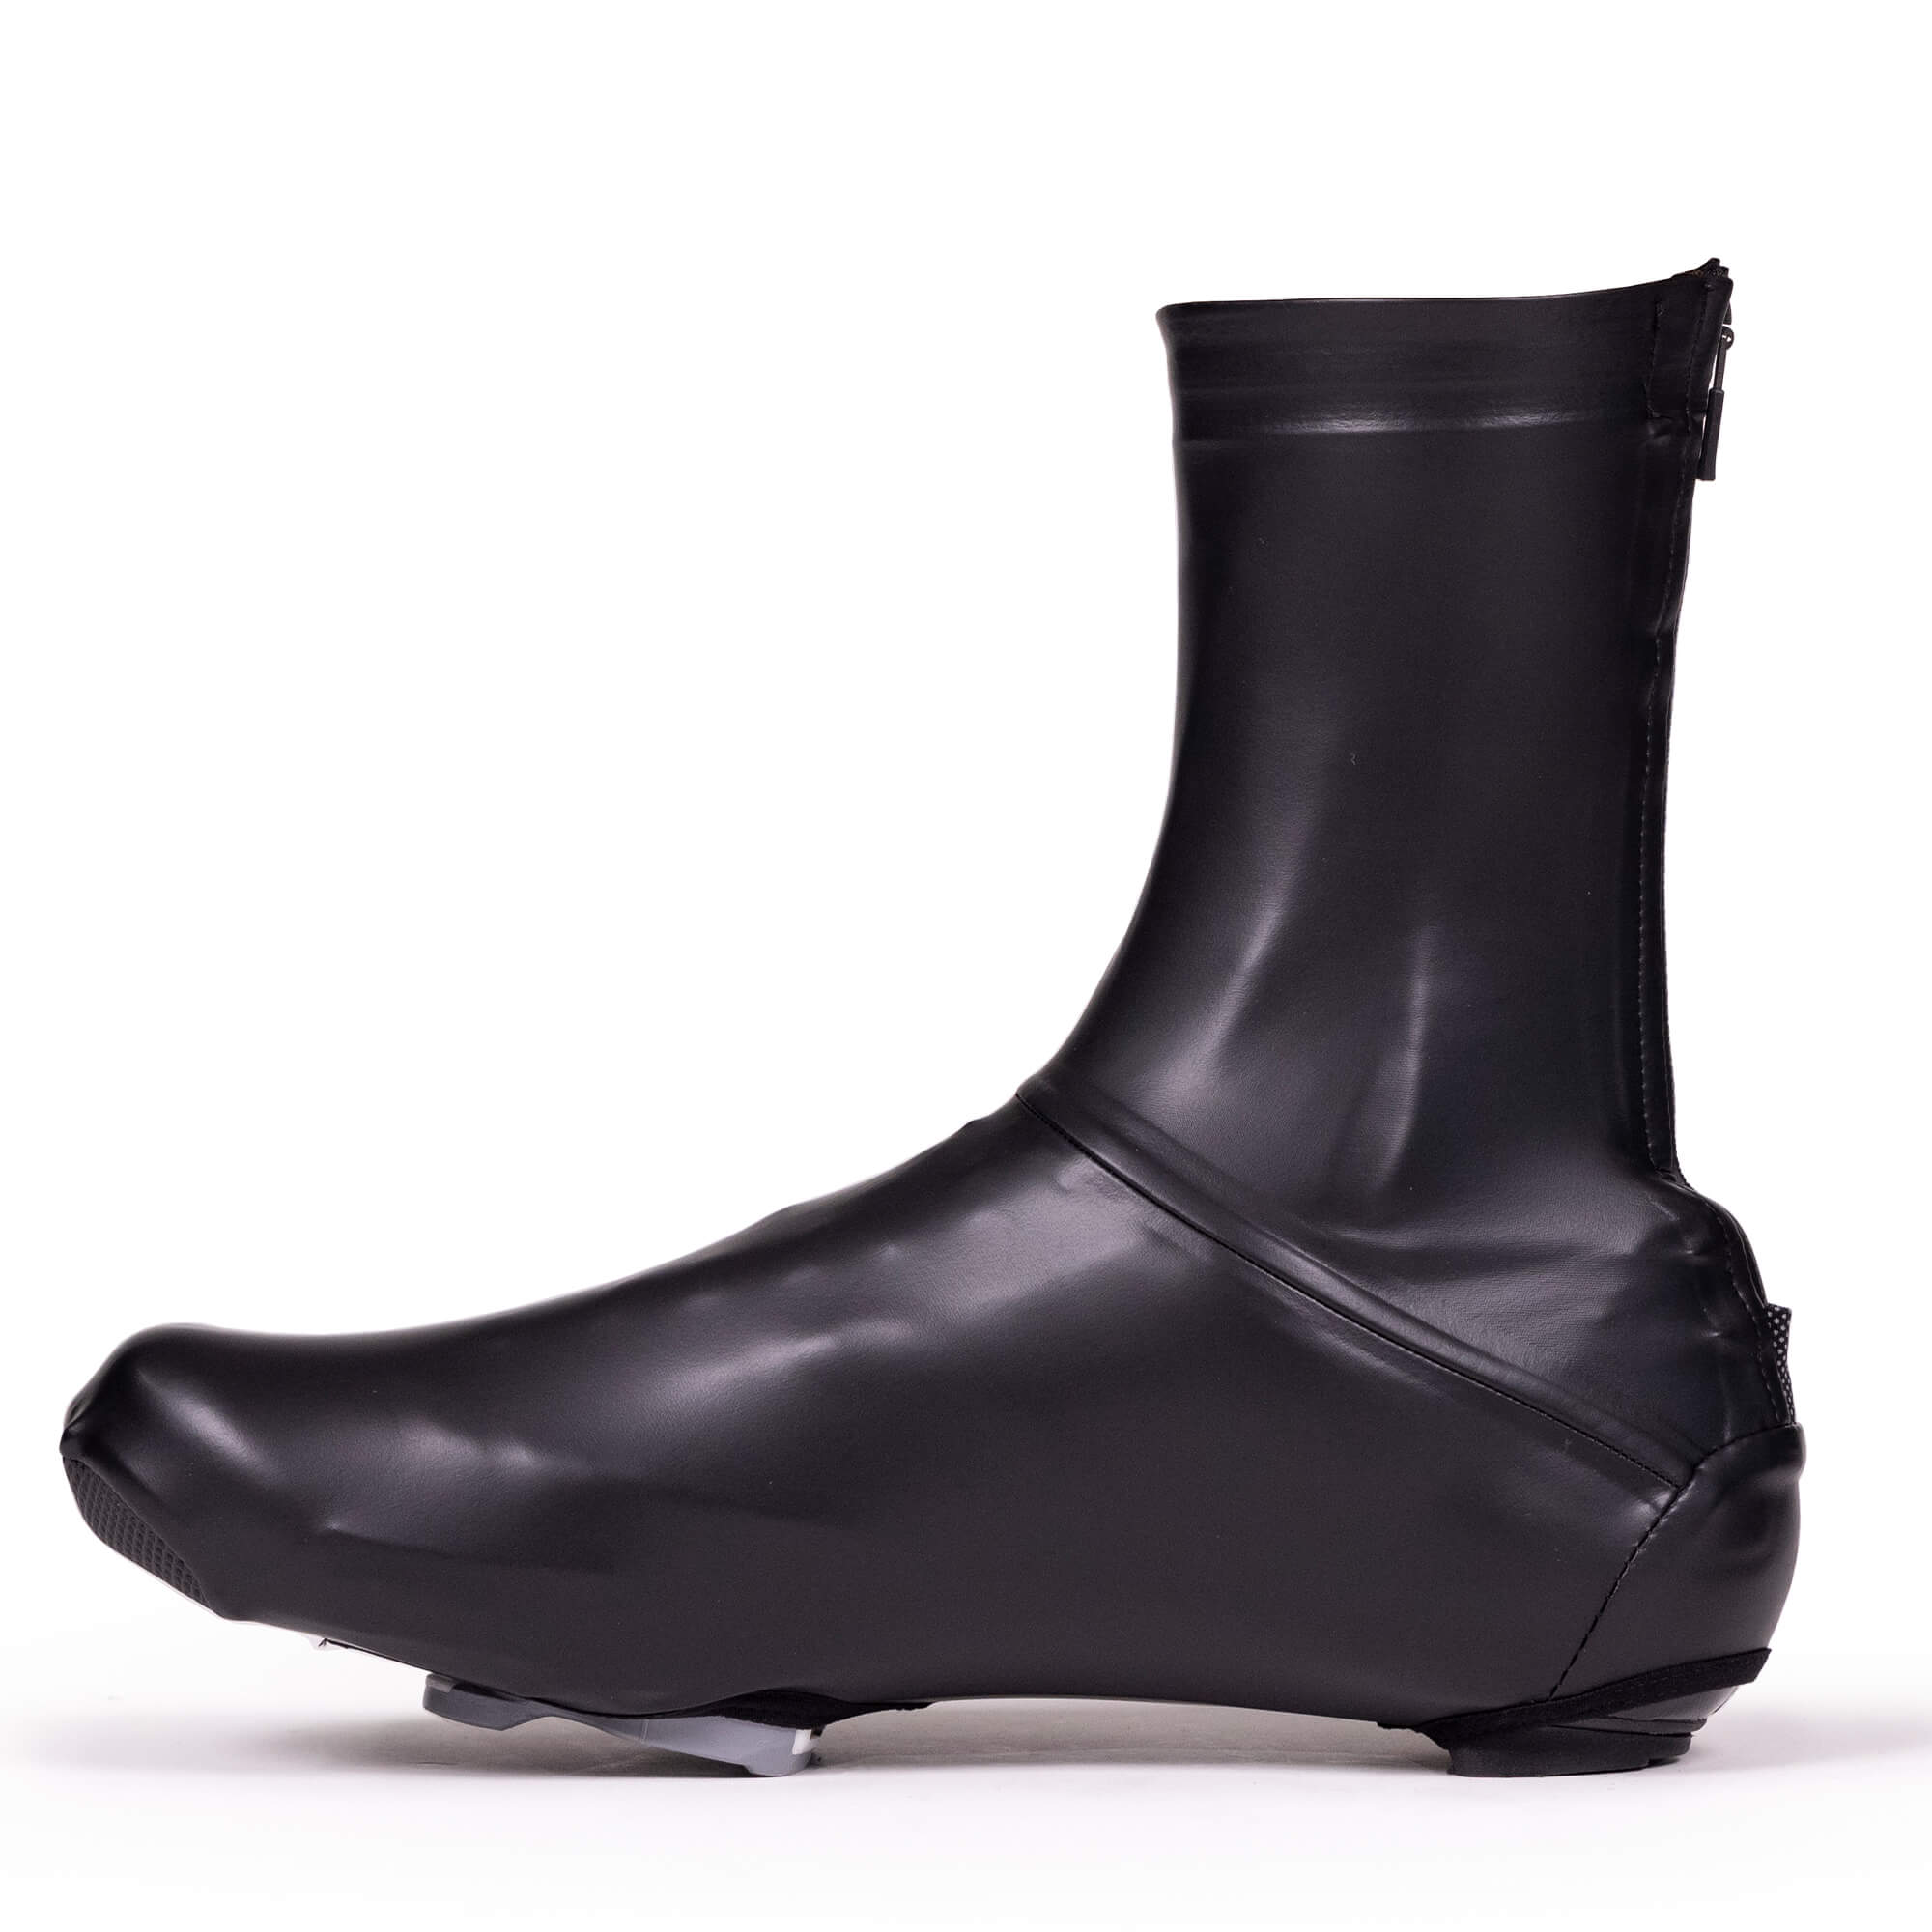 Waterproof Shoe Covers